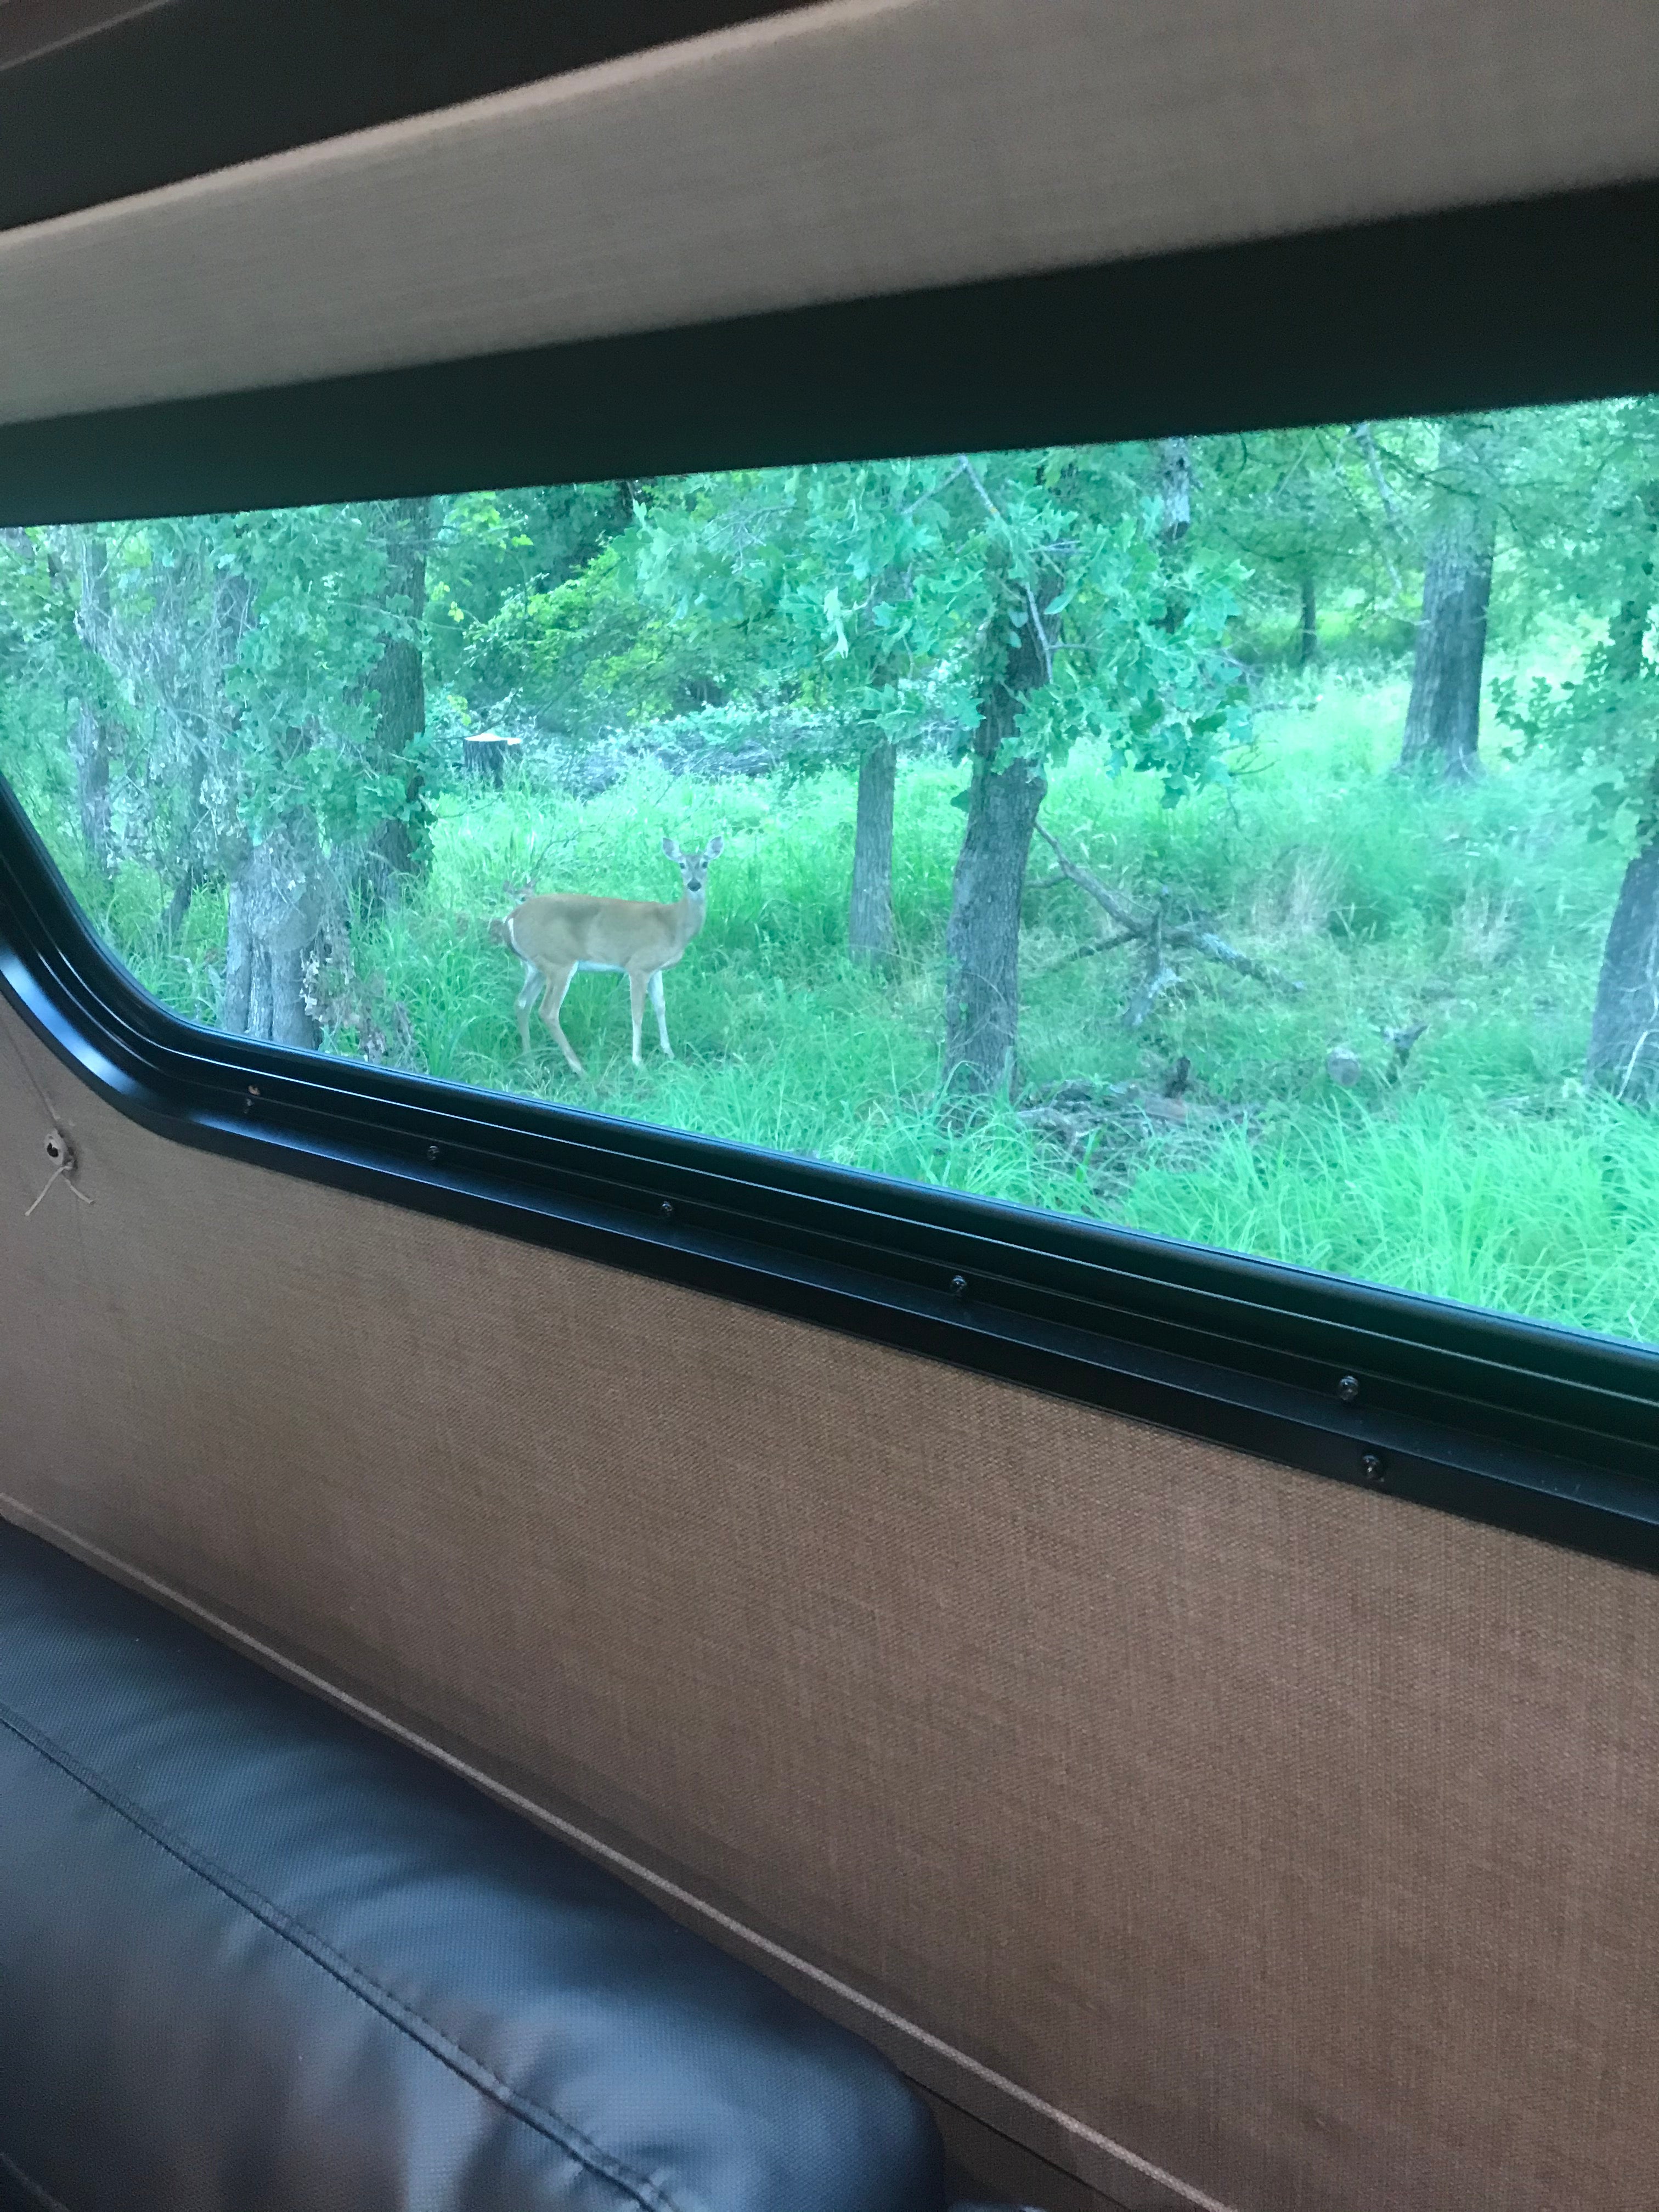 Deer through our camper window